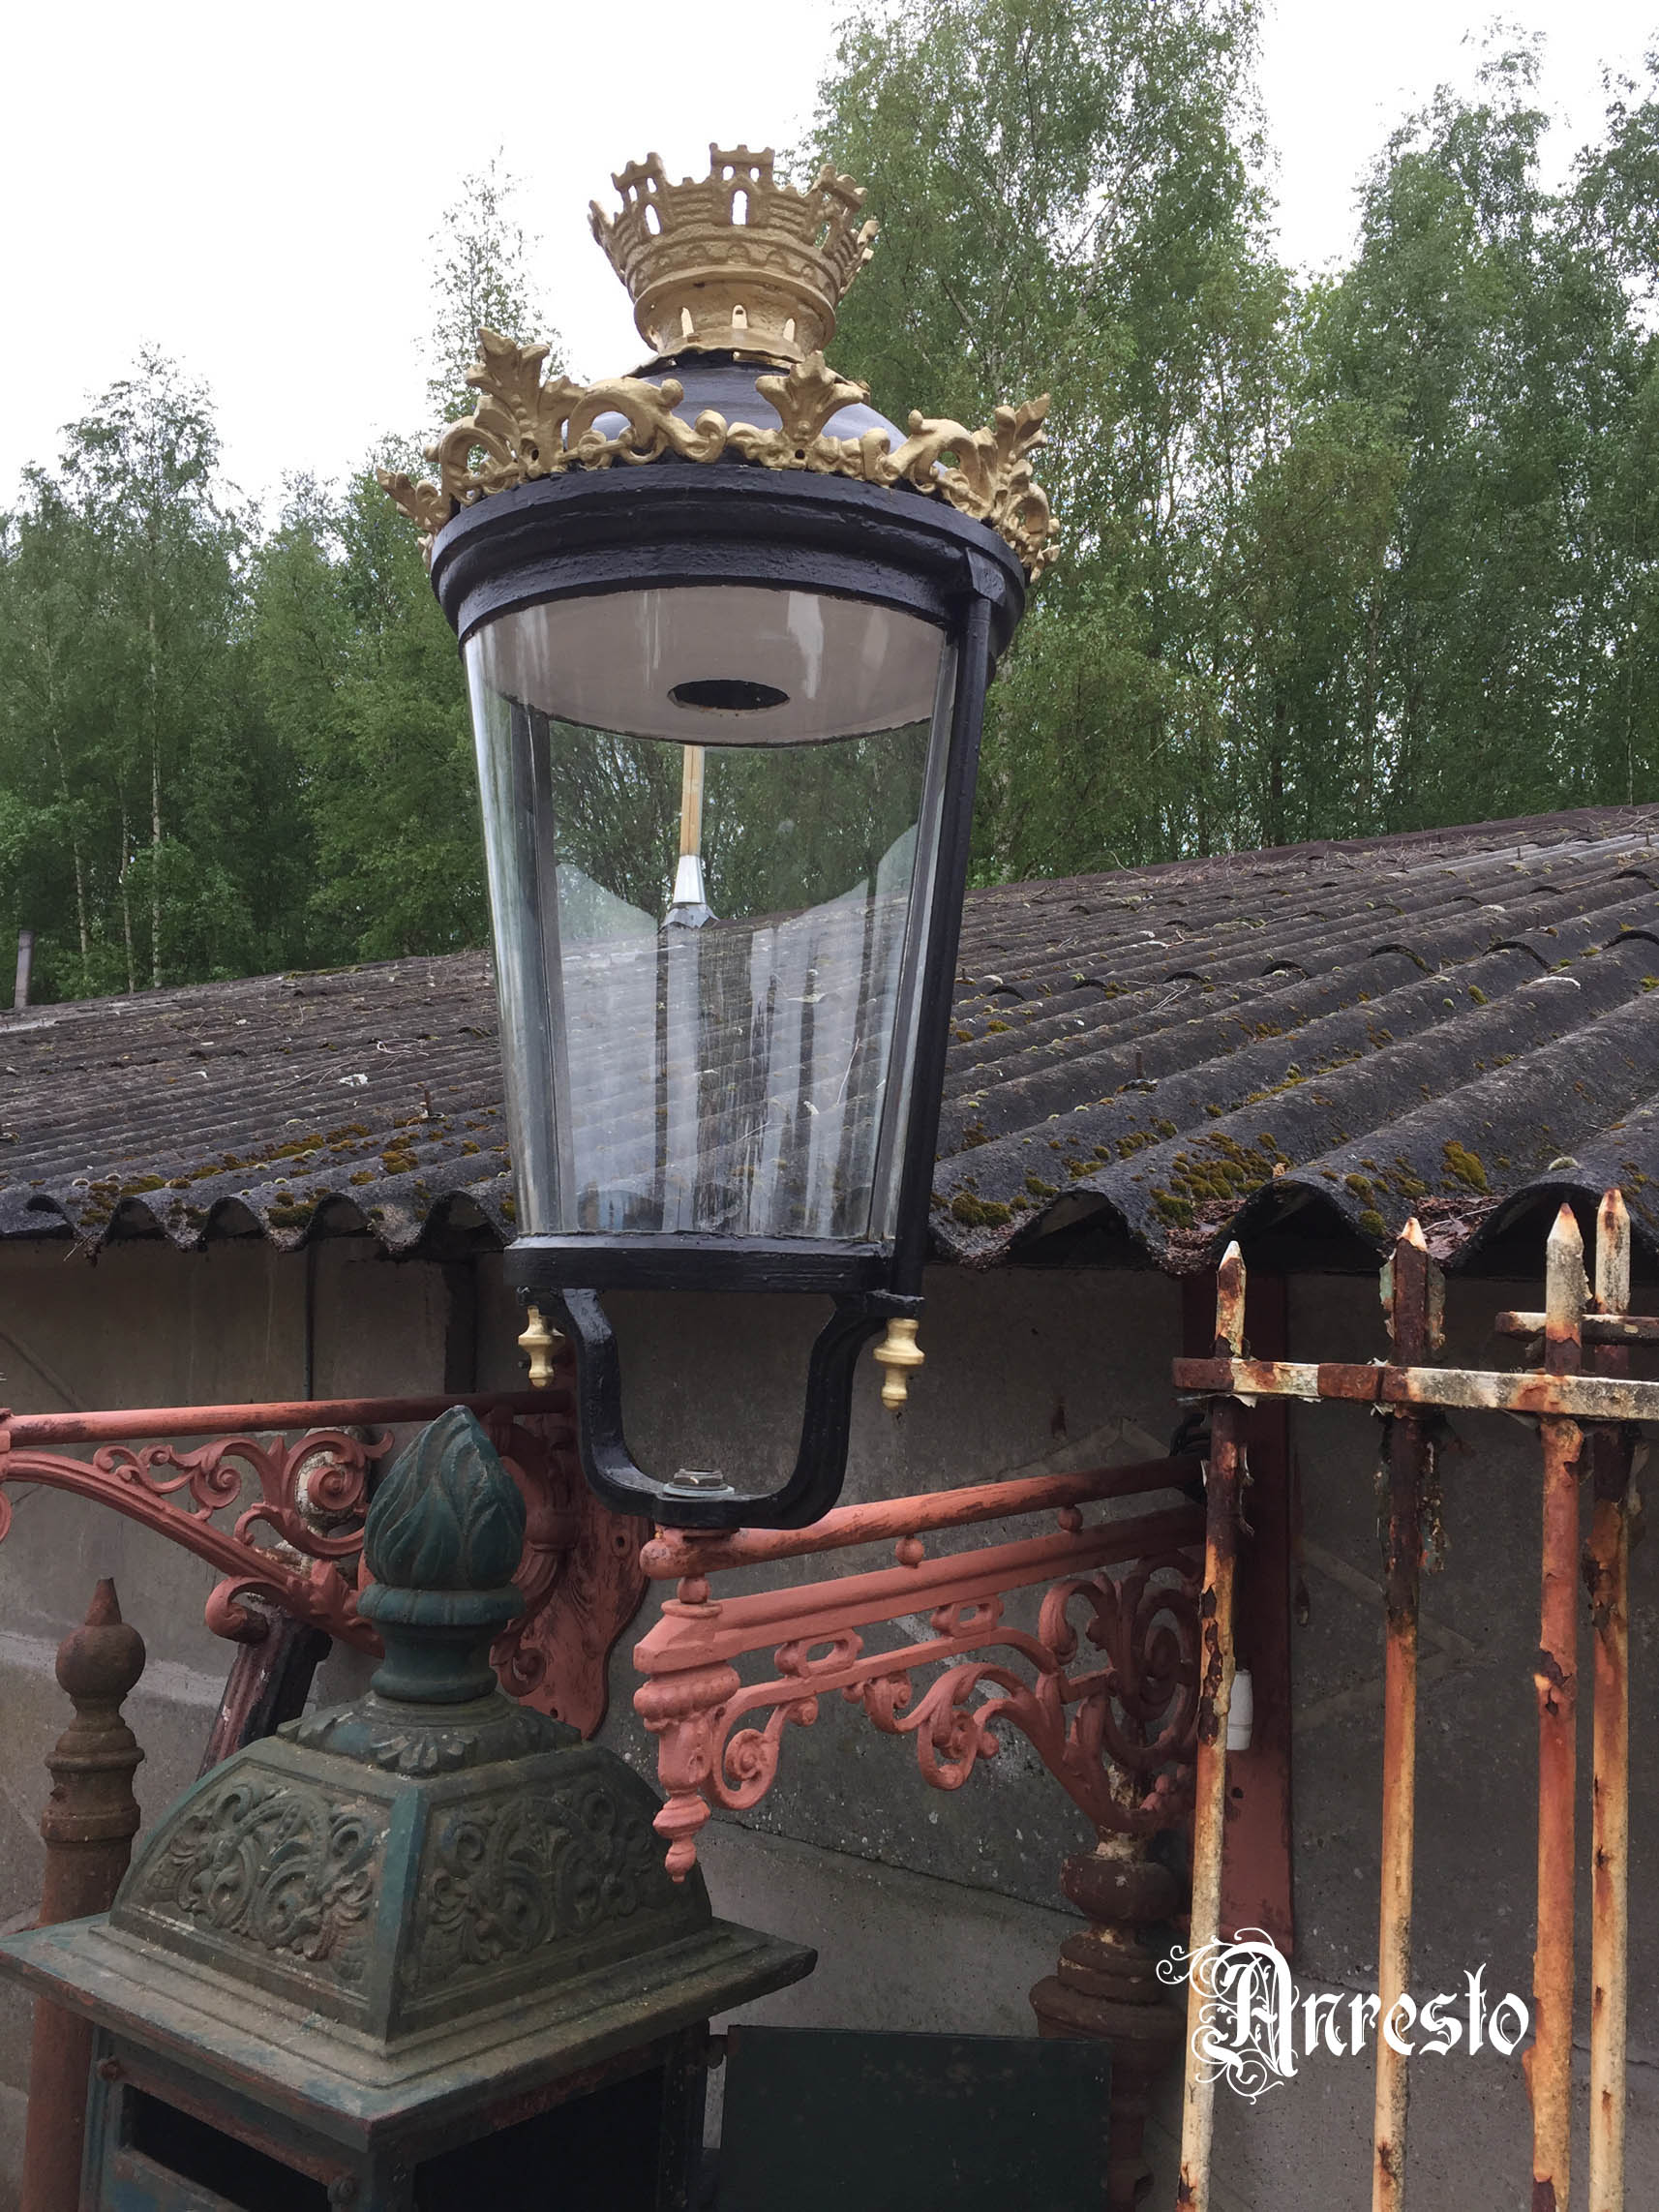 vereist Liever gebrek Antieke Tuinlampen Buitenverlichting Lantaarns: ANRESTO Antiek  tuinverlichting, Lantaarnpalen buitenlampen antieke lantaarns